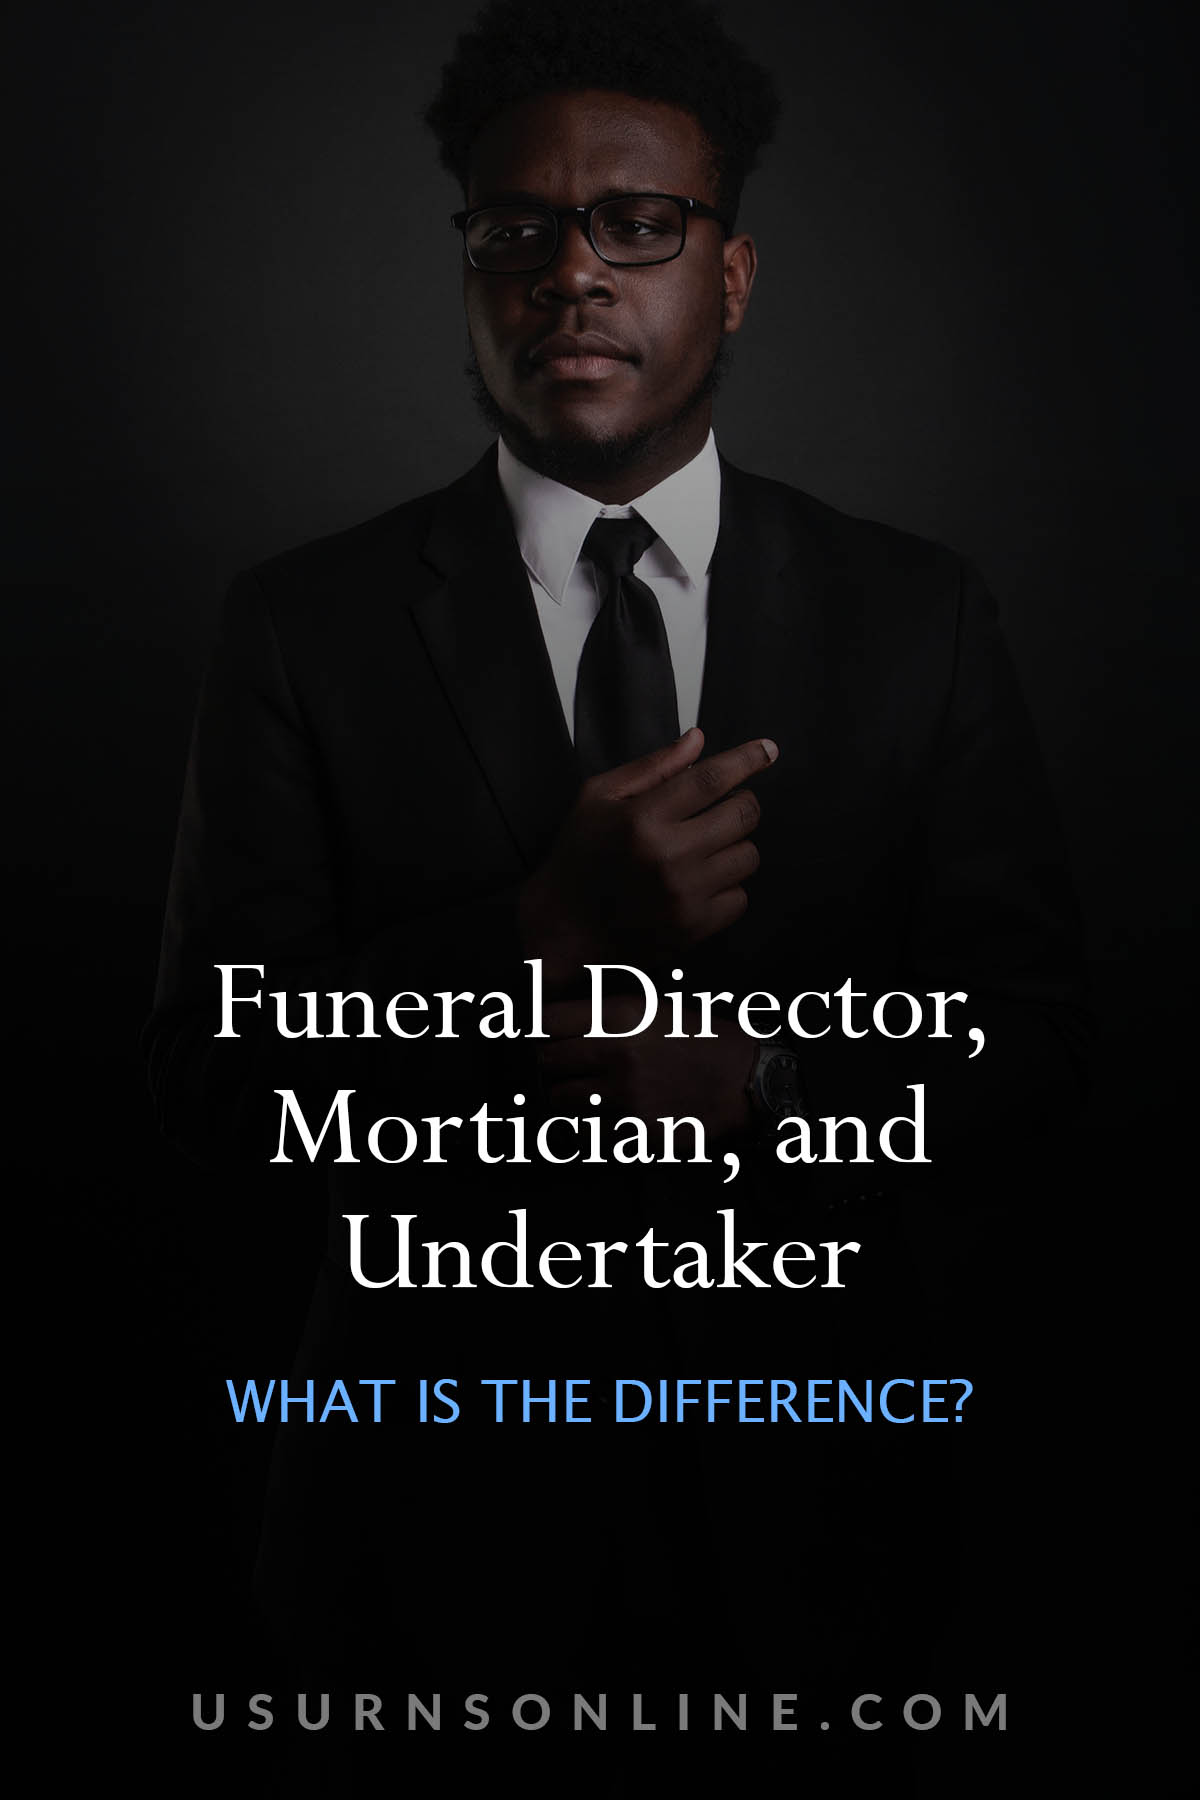 Who Runs a Funeral Home